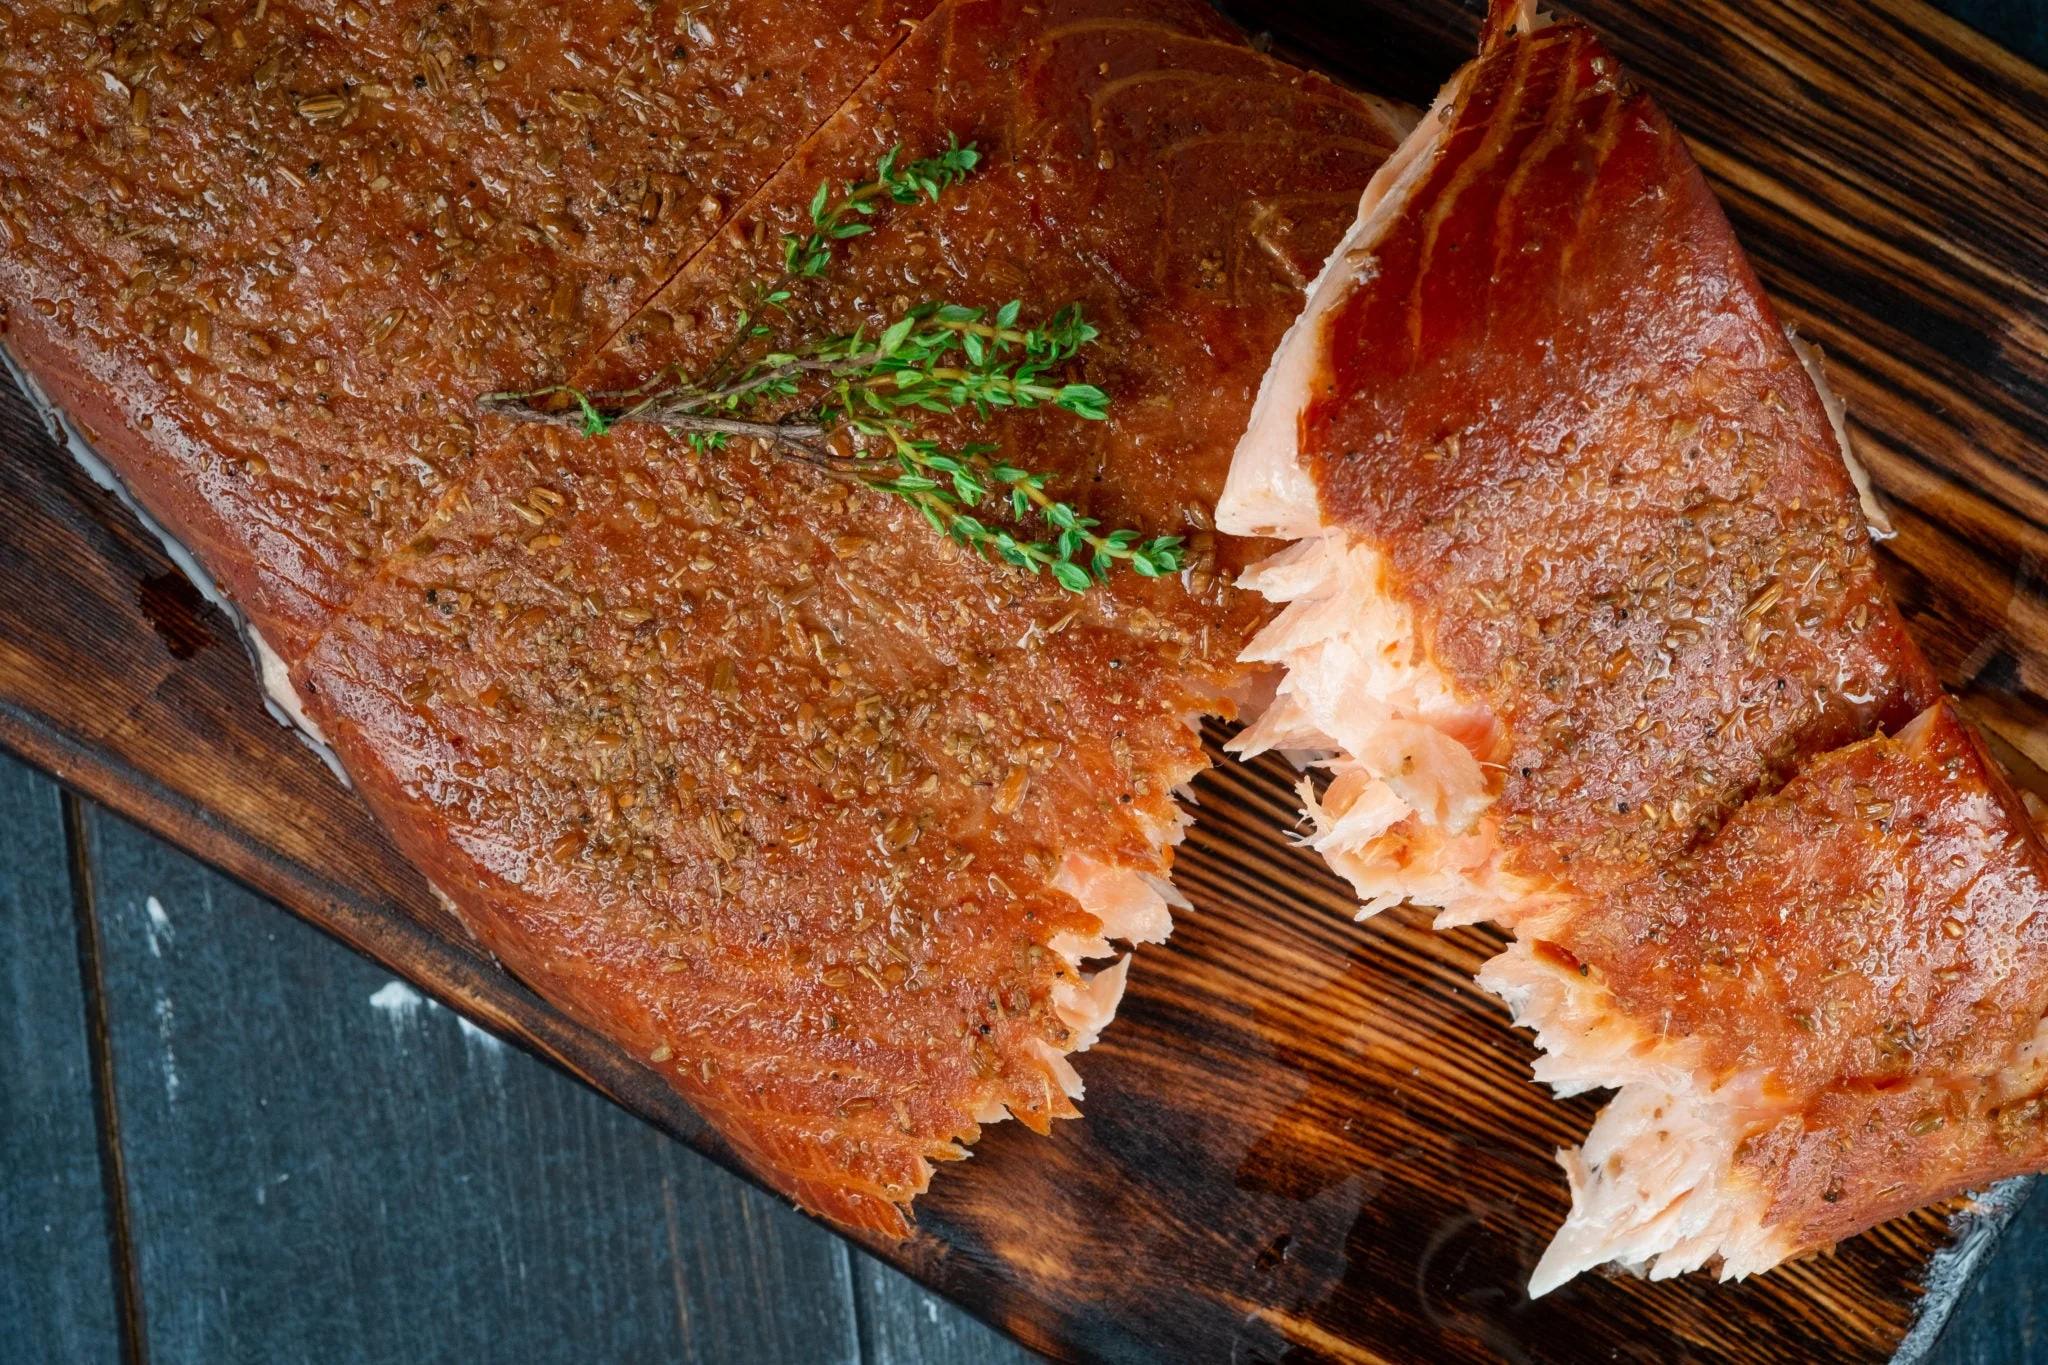 bradley smoked salmon recipe - How do you use a Bradley smoker for fish